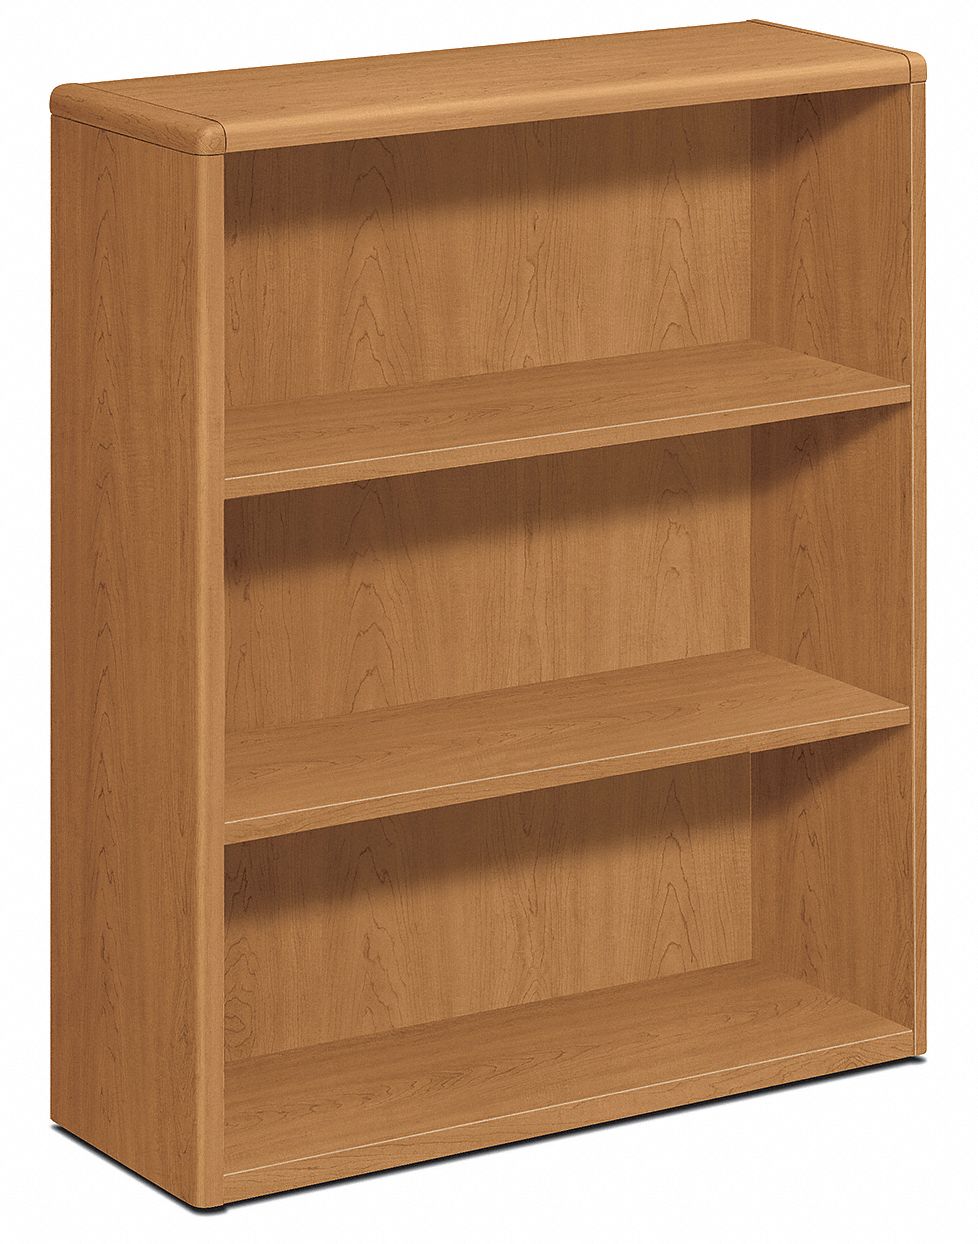 14M123 - Bookcase 3 Shelf Harvest